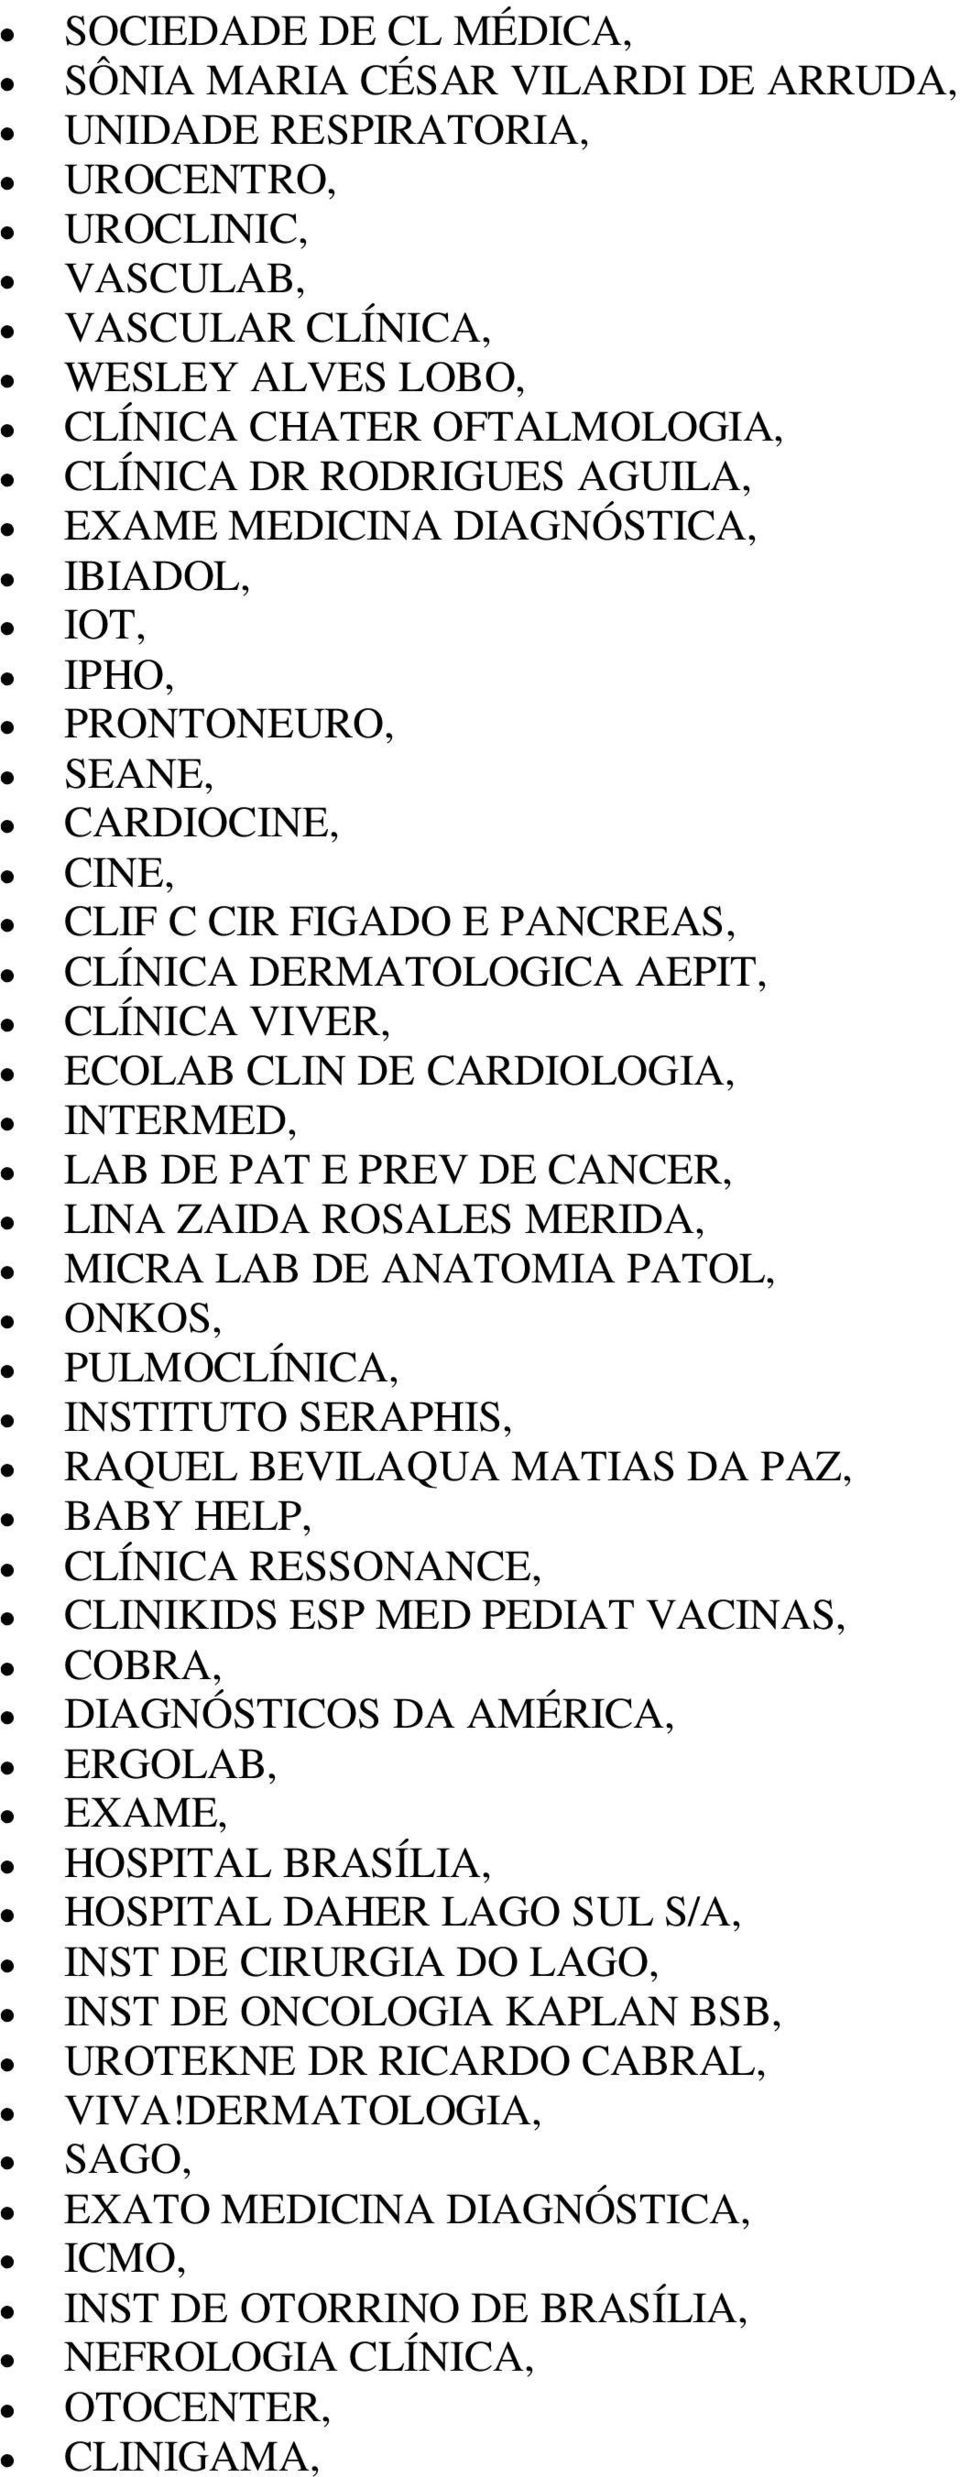 CARDIOLOGIA, INTERMED, LAB DE PAT E PREV DE CANCER, LINA ZAIDA ROSALES MERIDA, MICRA LAB DE ANATOMIA PATOL, ONKOS, PULMOCLÍNICA, INSTITUTO SERAPHIS, RAQUEL BEVILAQUA MATIAS DA PAZ, BABY HELP, CLÍNICA